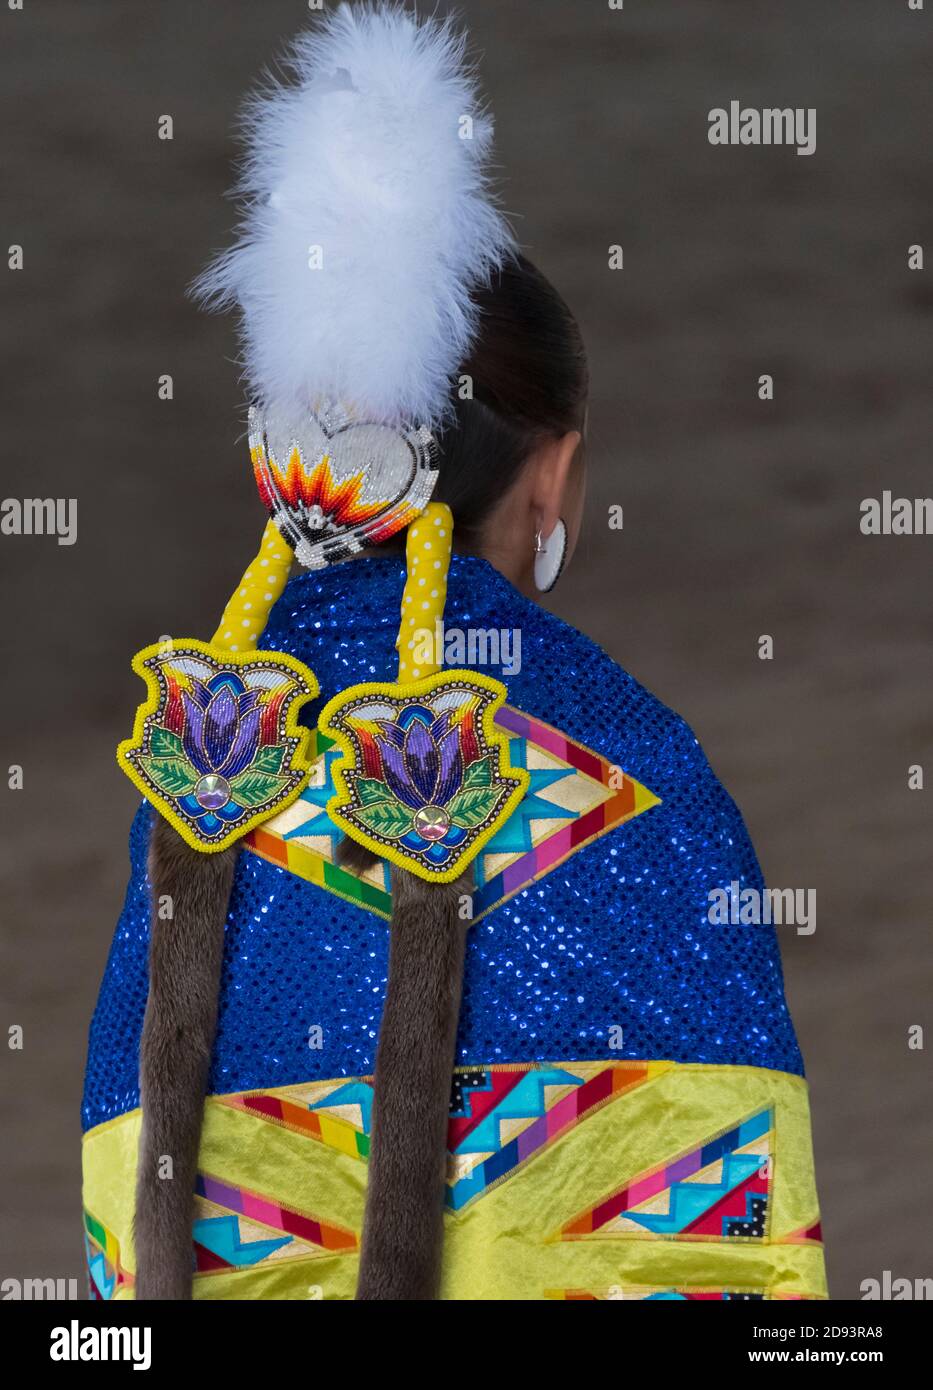 Native American girl wearing traditional clothing dancing, Omak, Washington State, USA Stock Photo